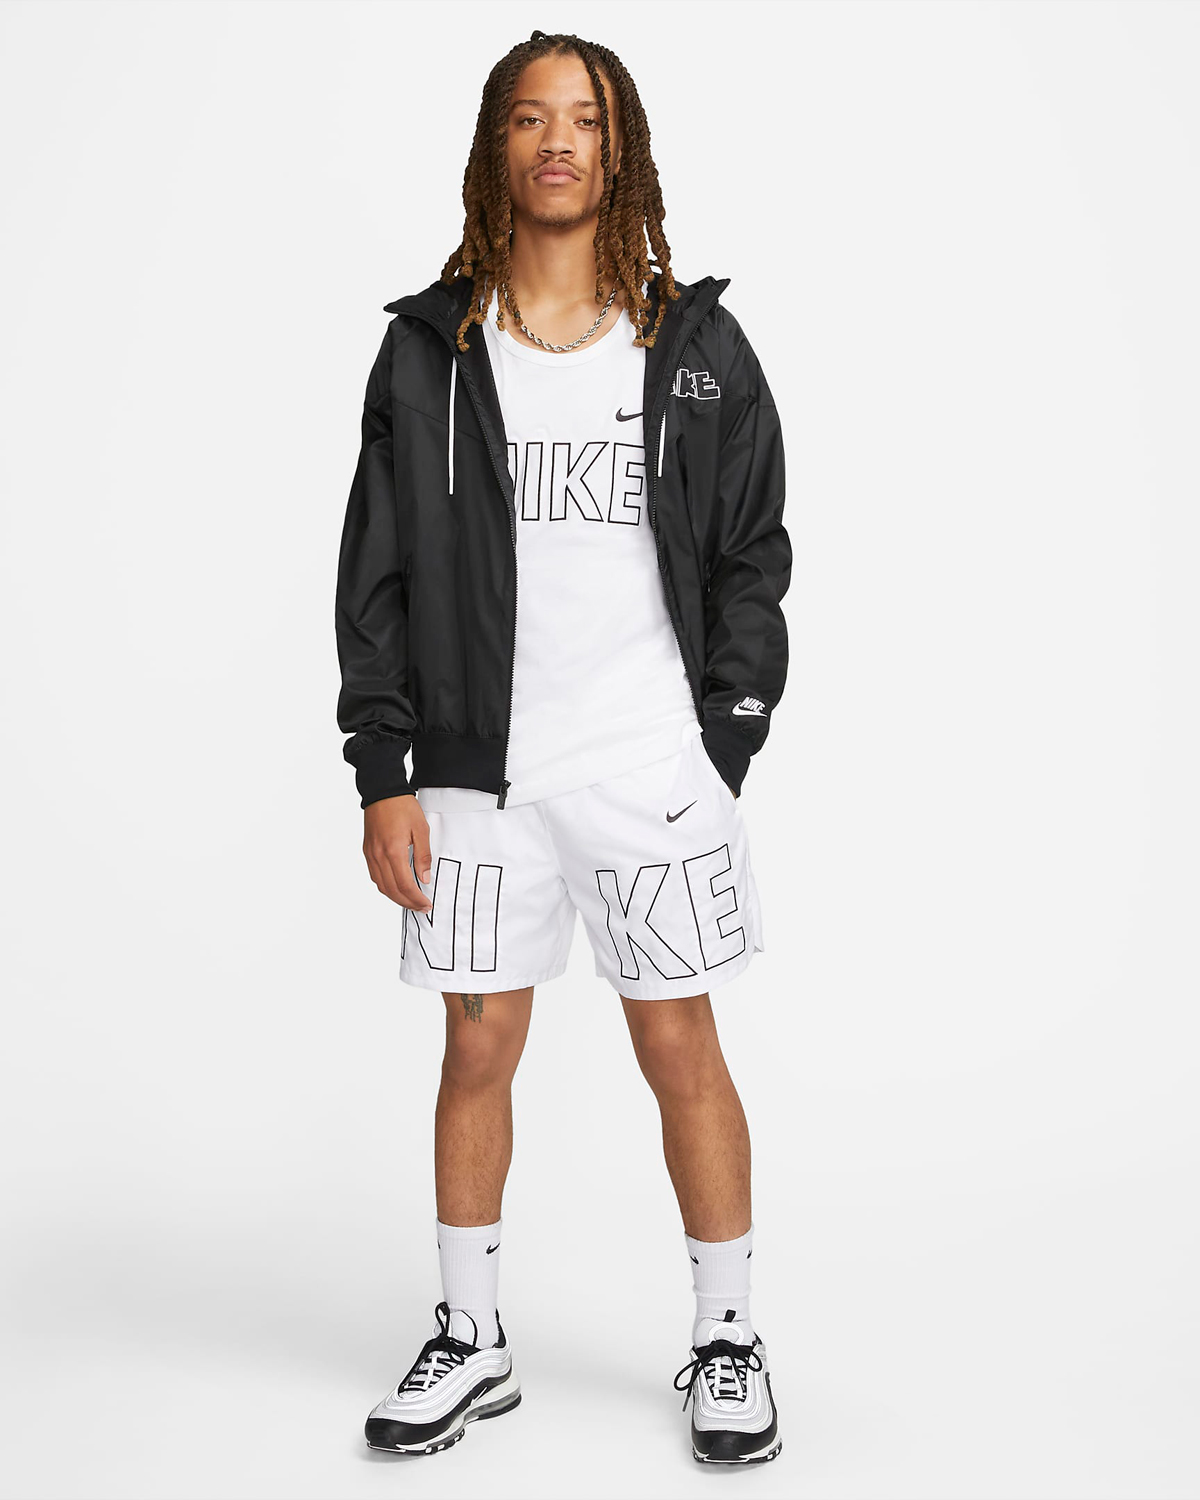 Nike-Sportswear-Graphic-Tank-Top-Shorts-White-Black-Outfit